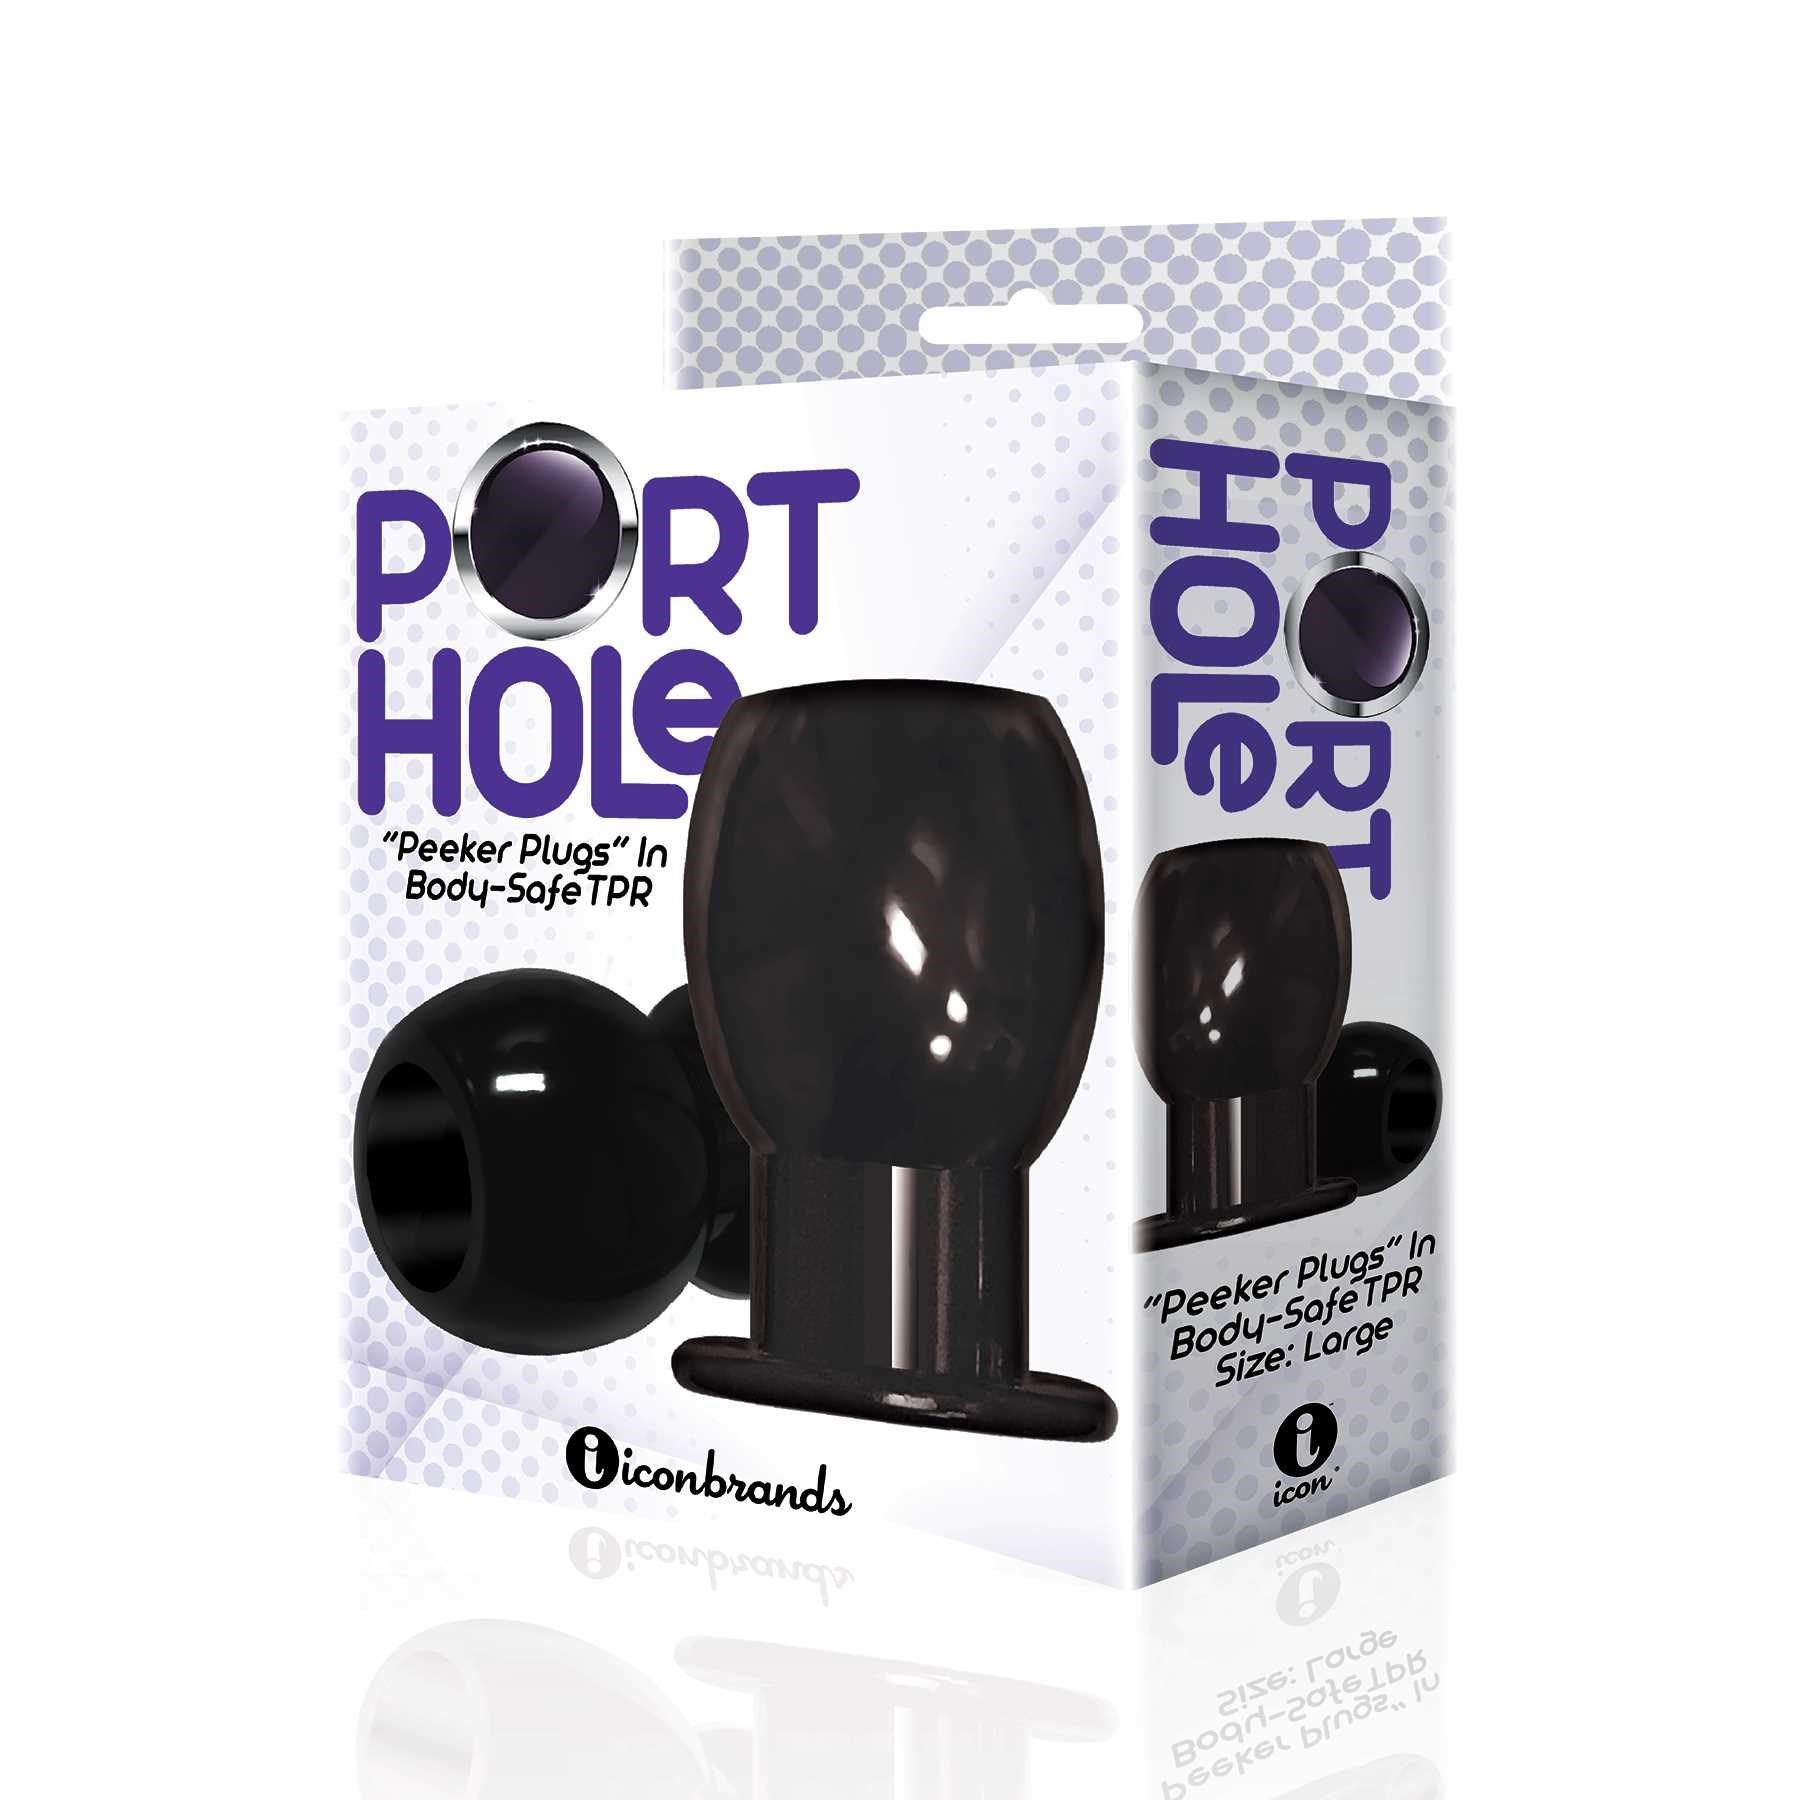 Port Holes Anal Plug Viewer packaging